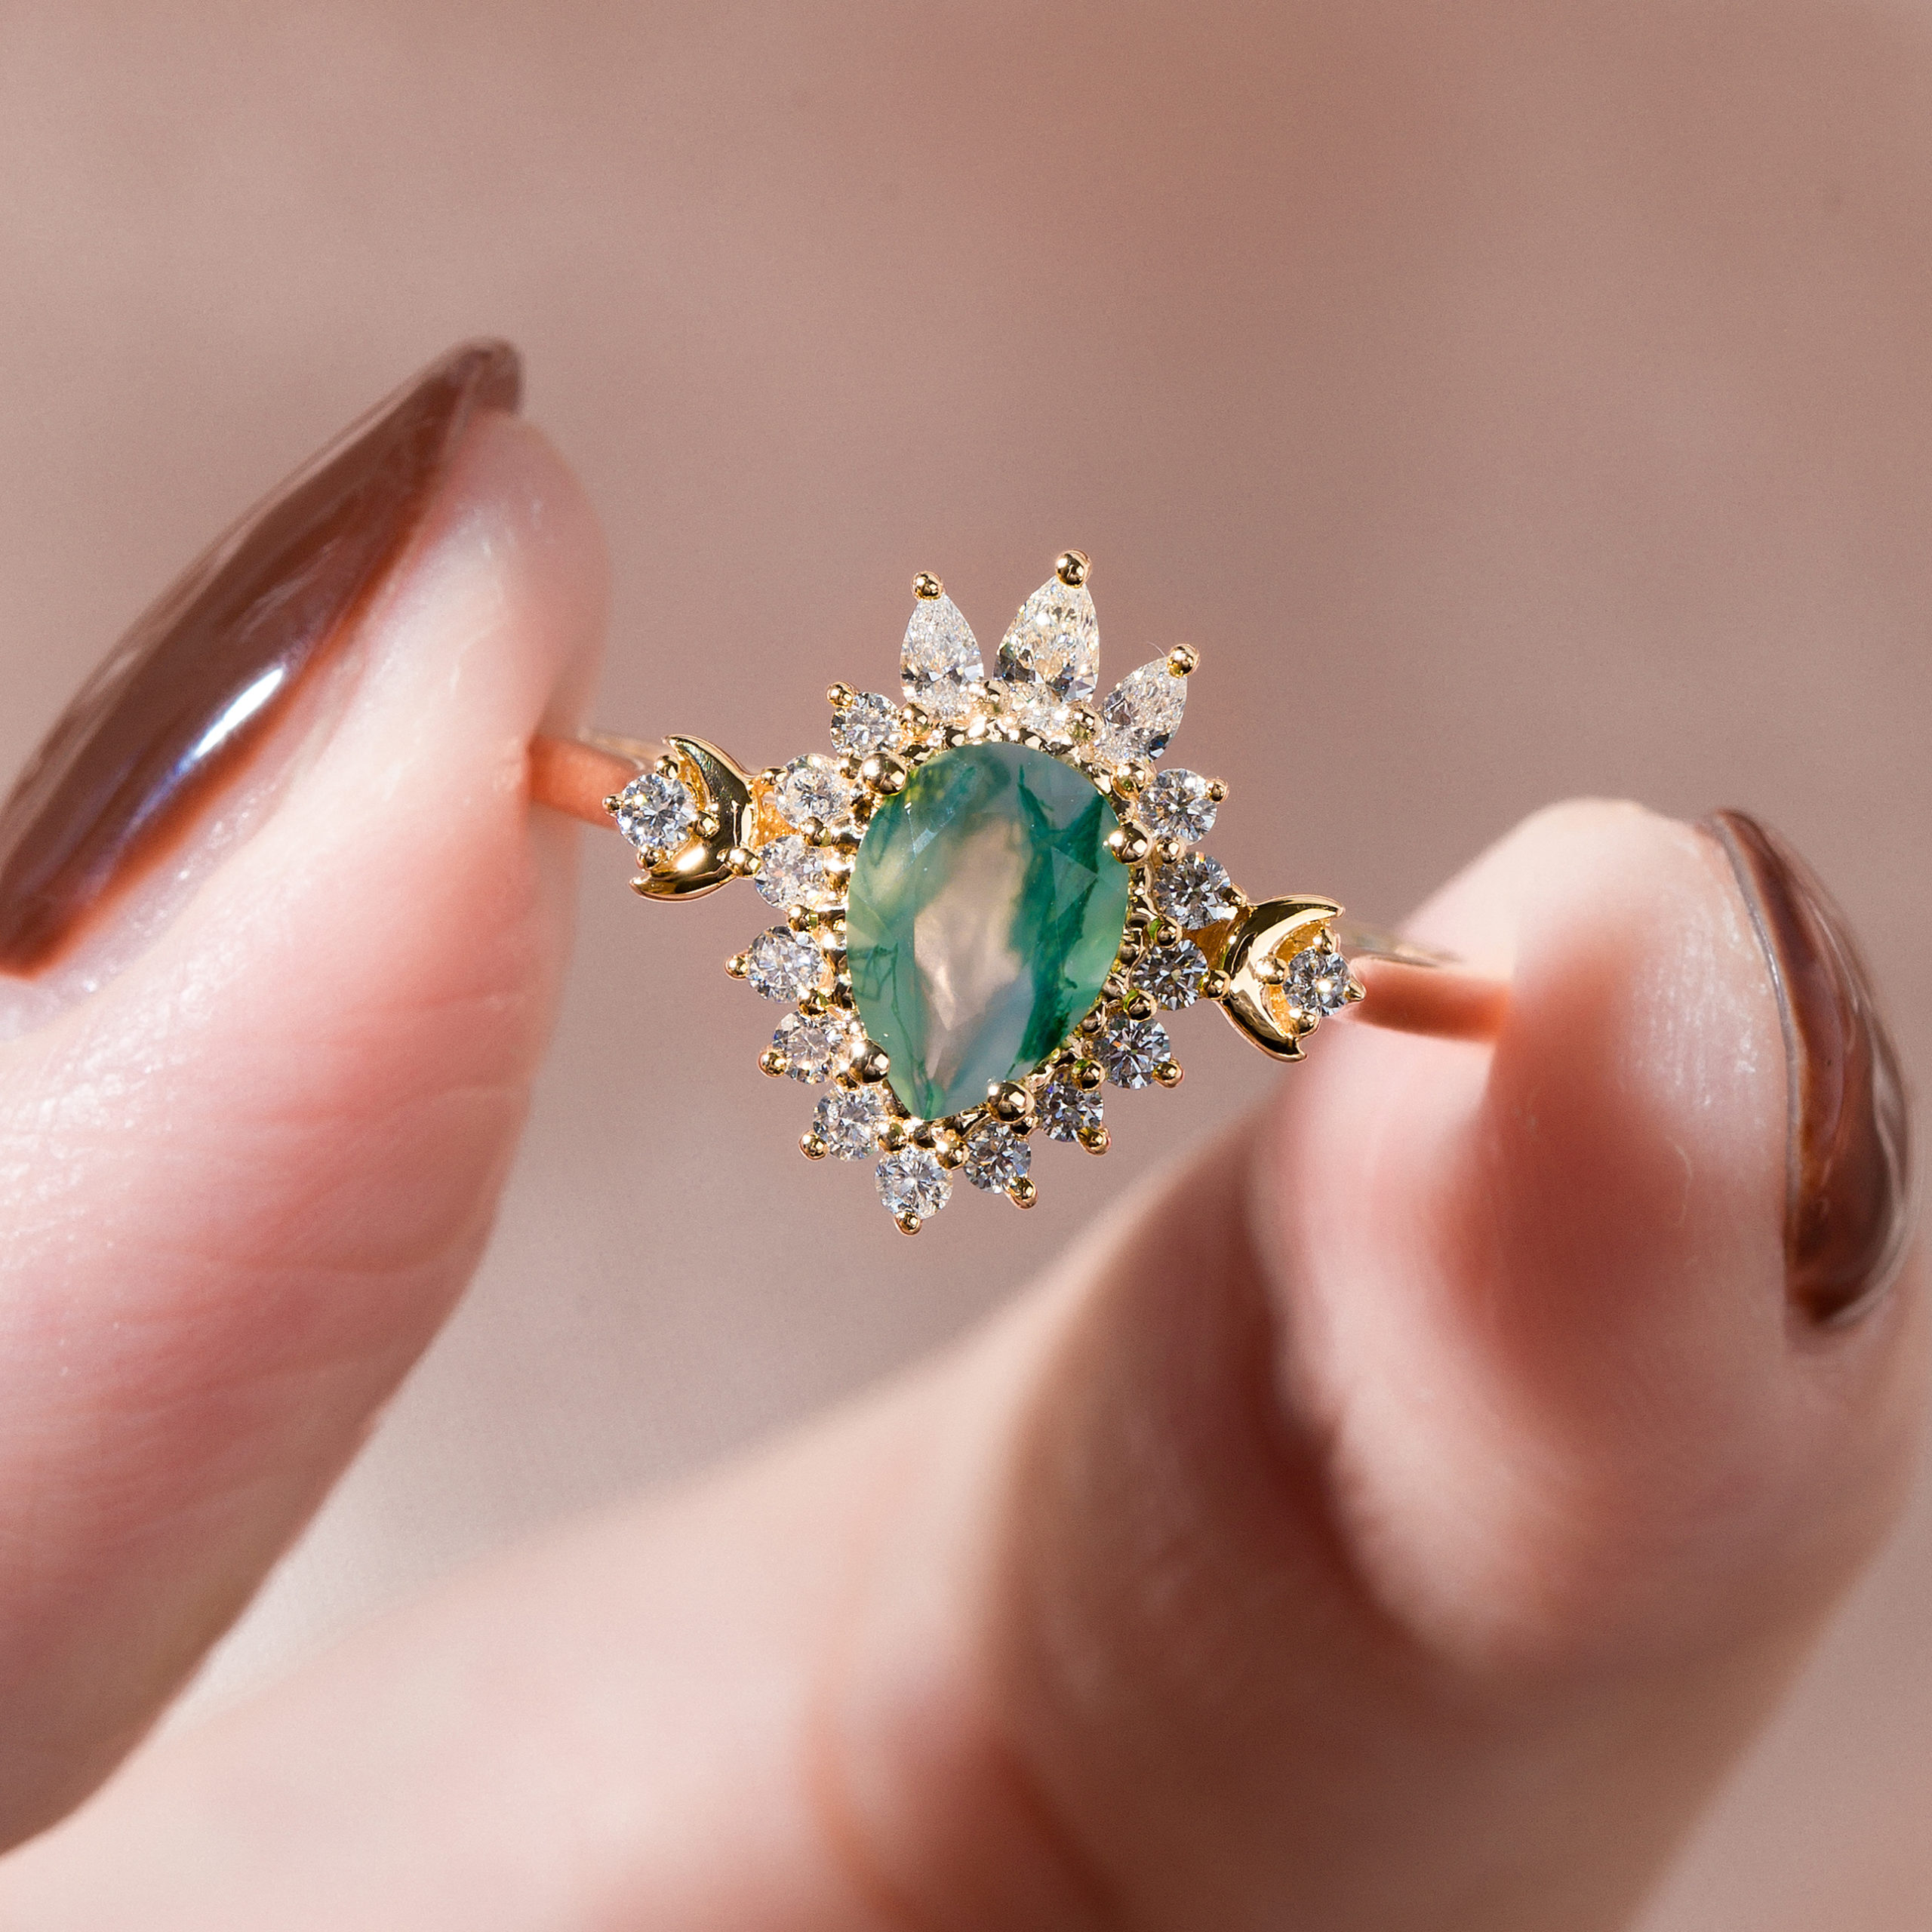 Locasta Crescent Moon Ring – Celtic Crystal Design Jewelry